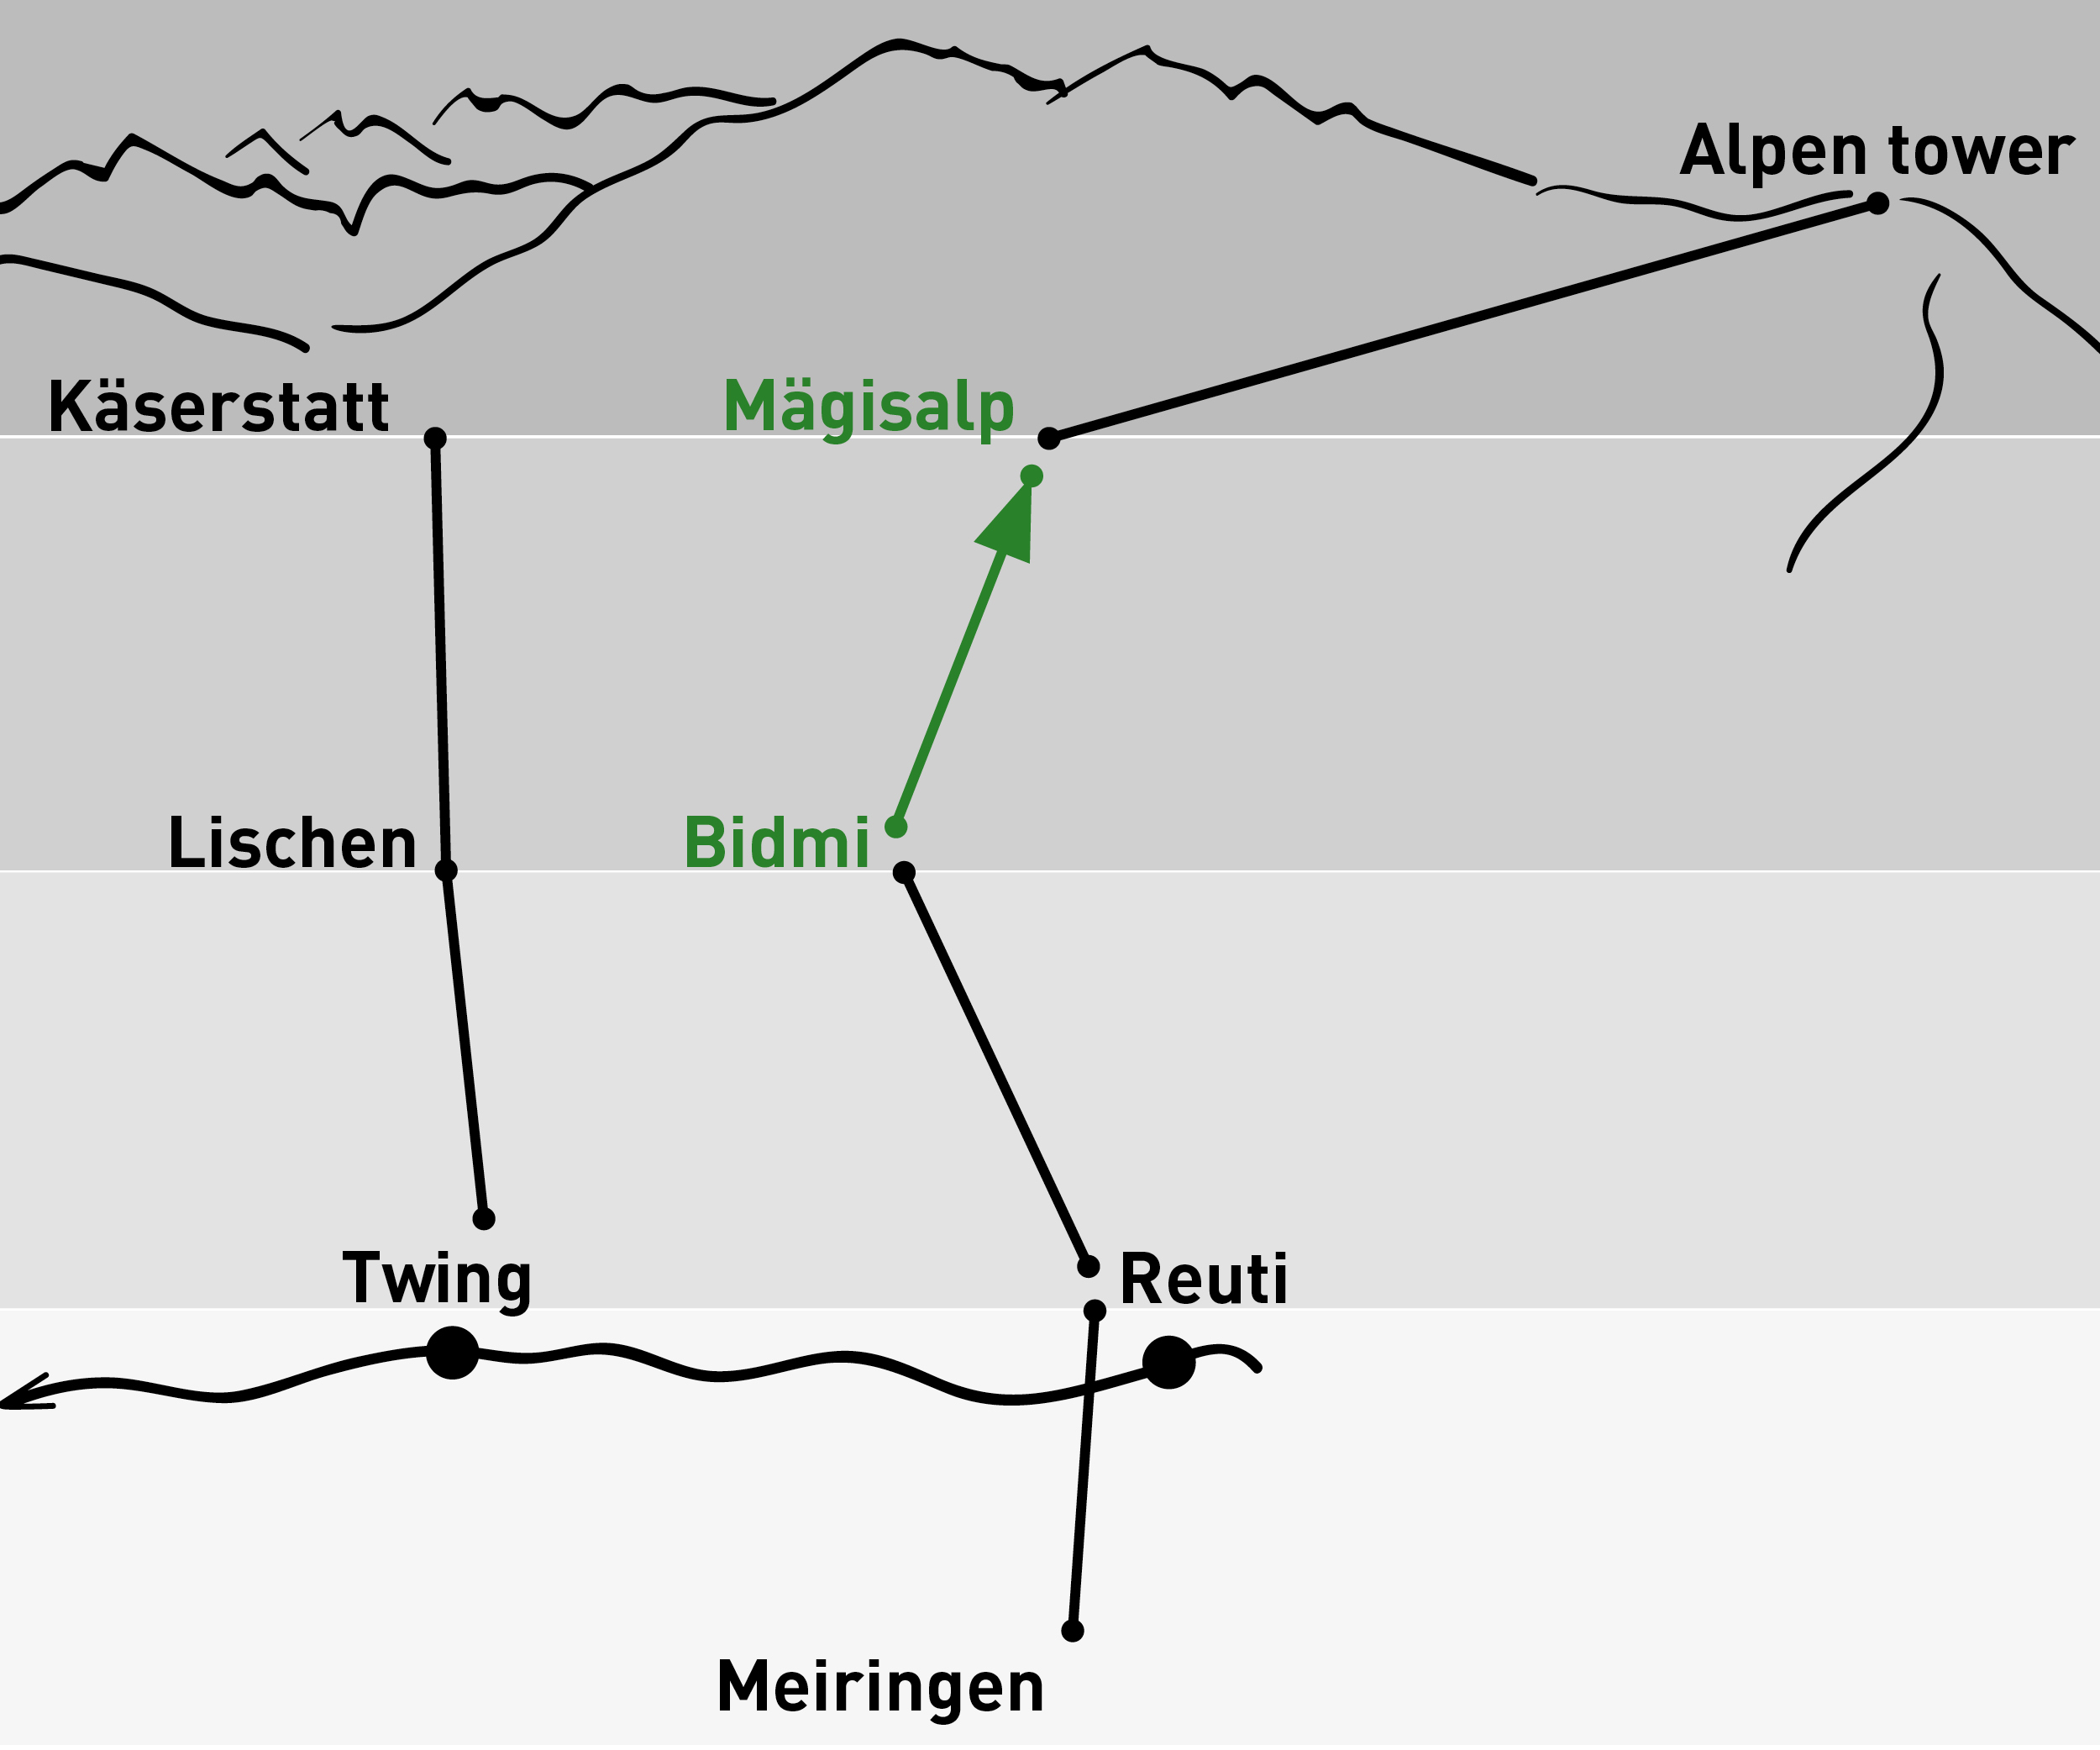 Bidmi - Mägisalp | One-way trip